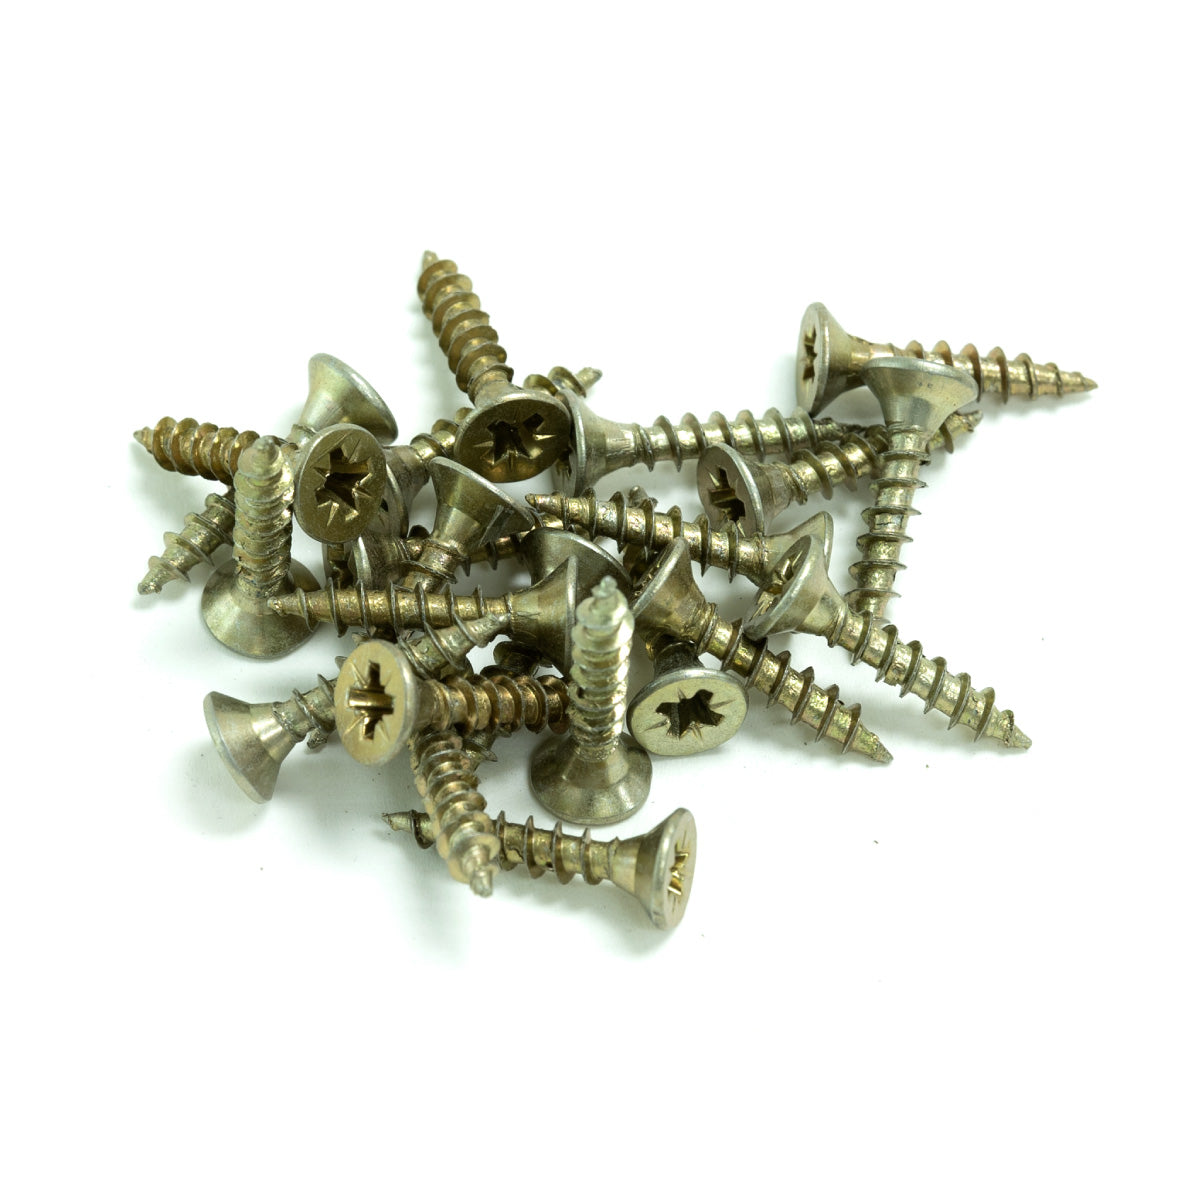 180pcs yellow zinc plated countersunk single thread screws 4x20mm (no brand name)